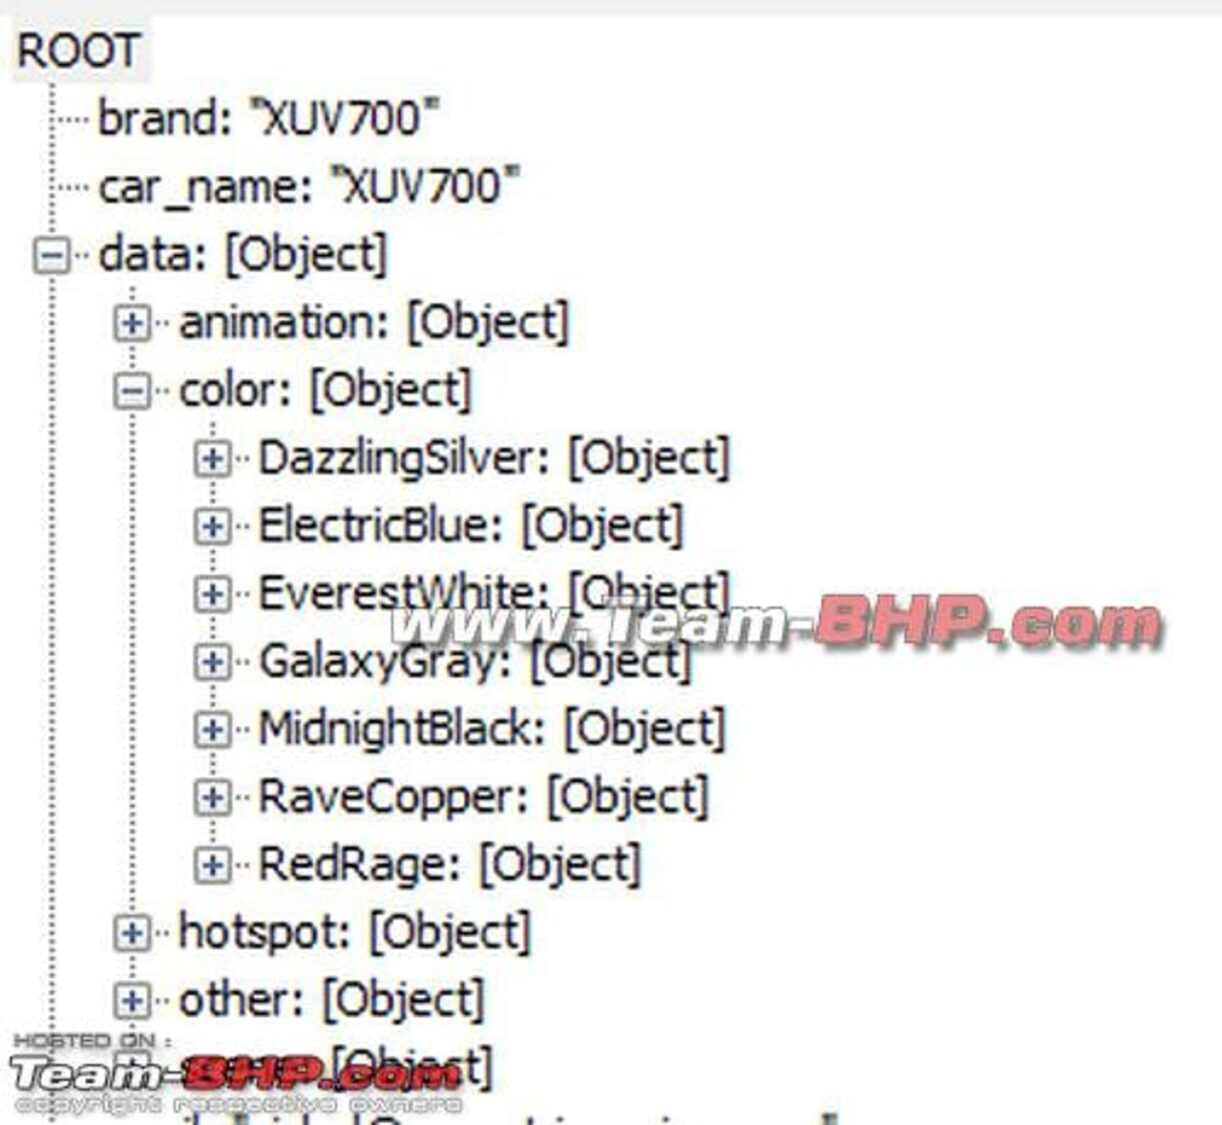 Mahindra XUV700 website source code reveals 7 colours